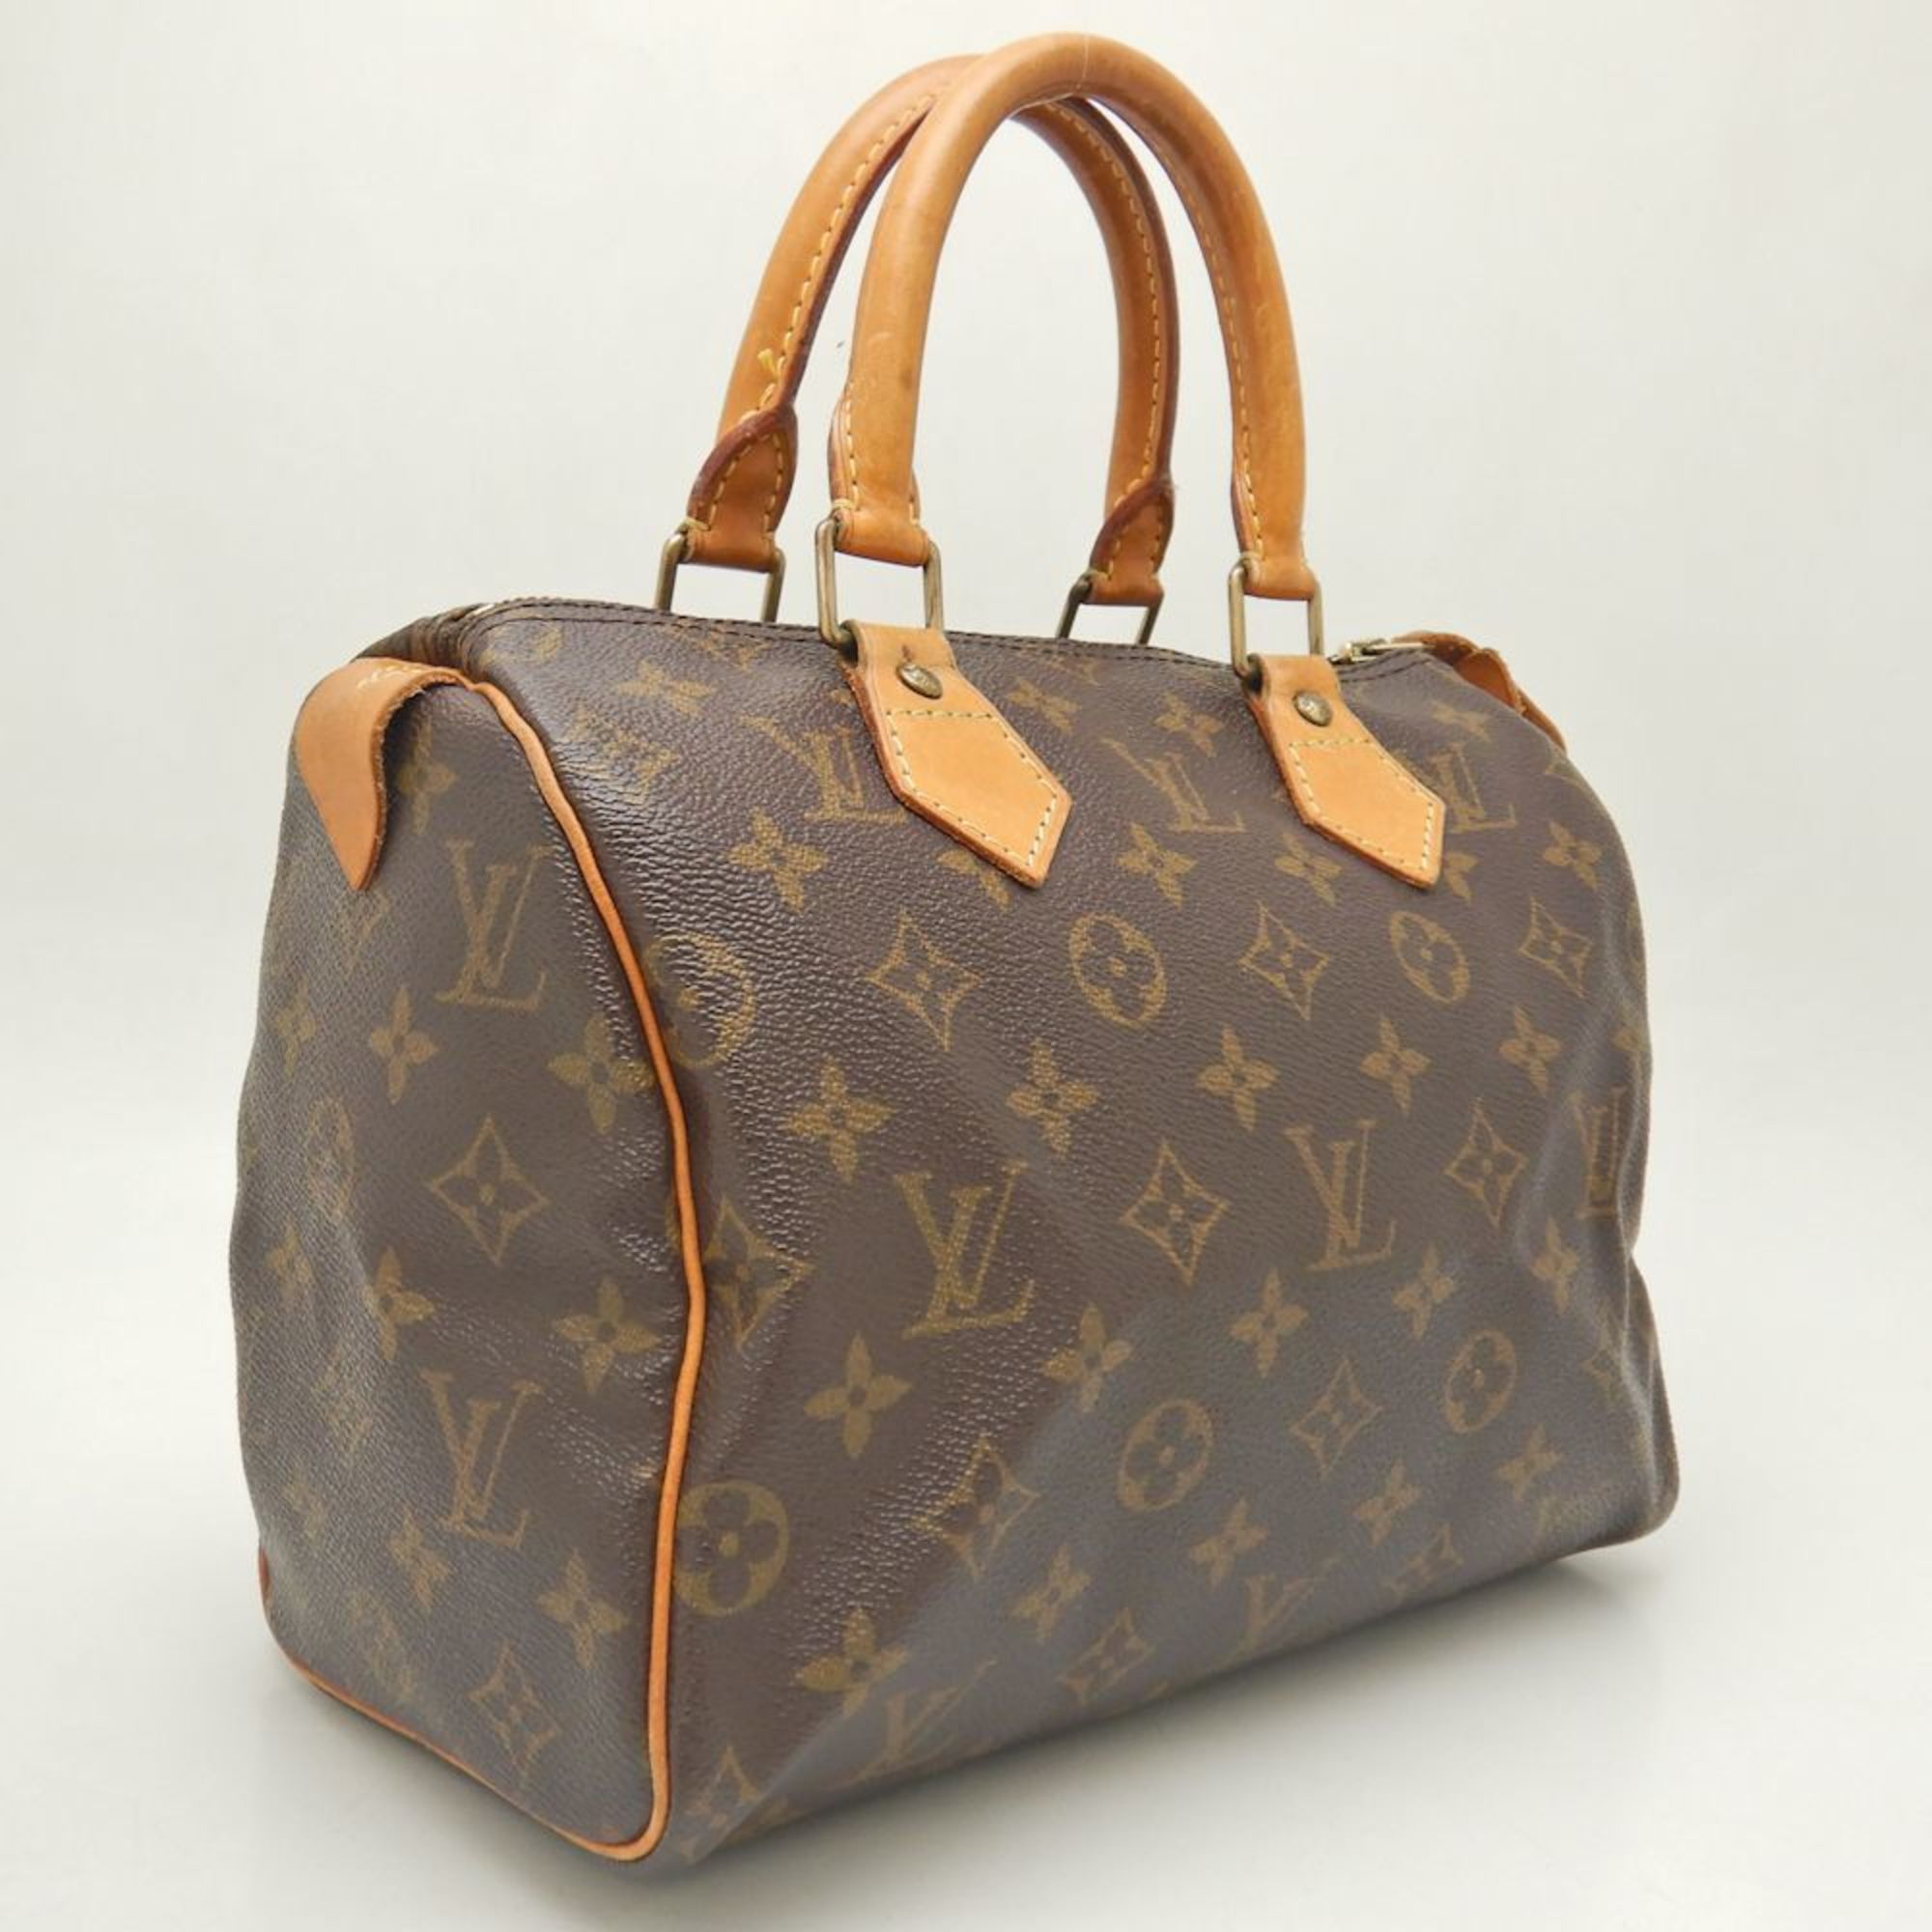 LOUIS VUITTON Louis Vuitton Monogram Speedy 25 M41528 Handbag Brown 251842